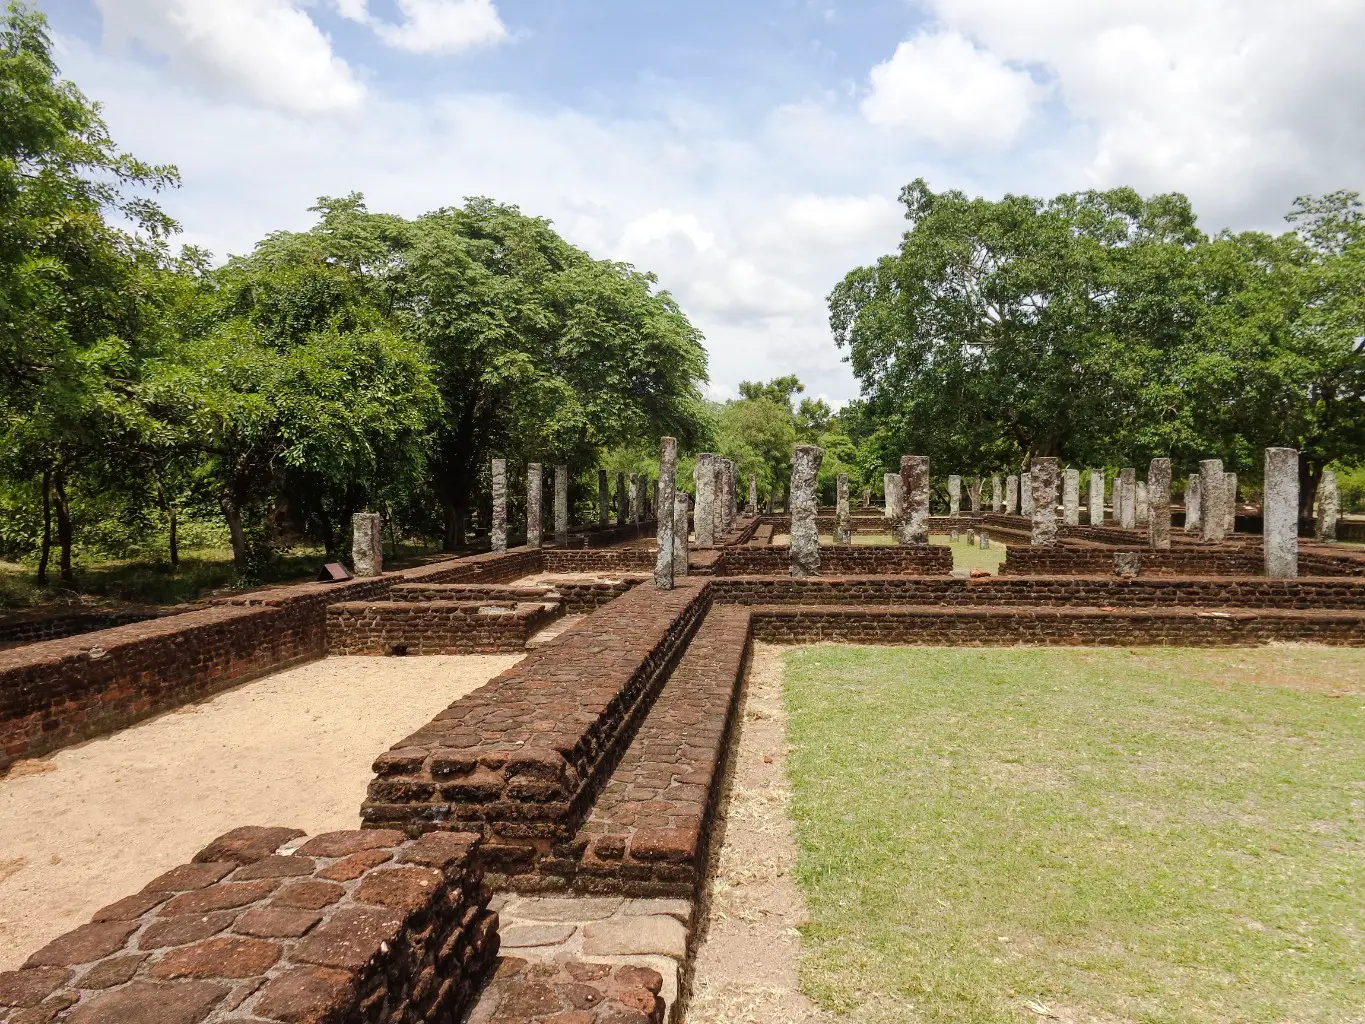 Monastic-Hospital-Ancient-City-of-Polonnaruwa-2